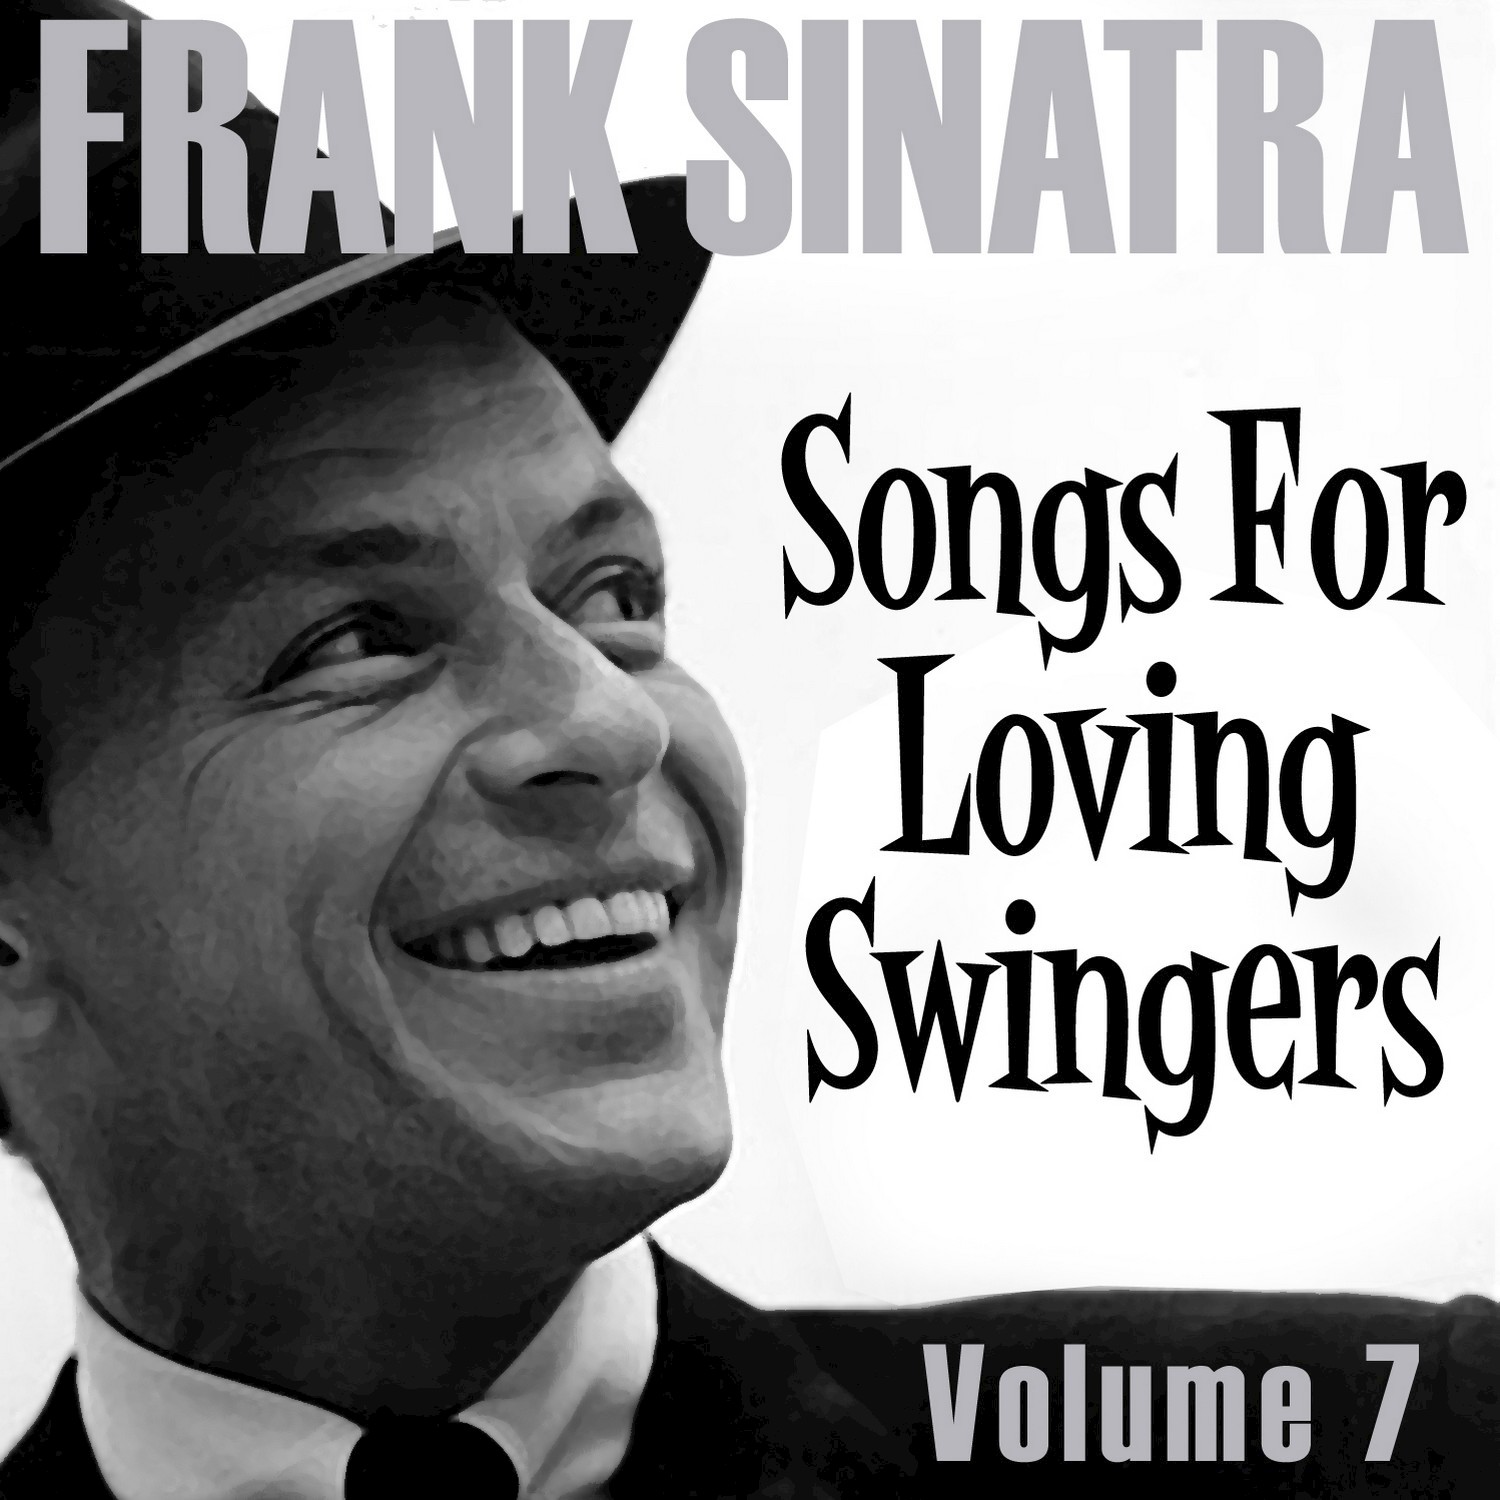 Frank Sinatra - Songs for Loving Swingers, Vol. 7